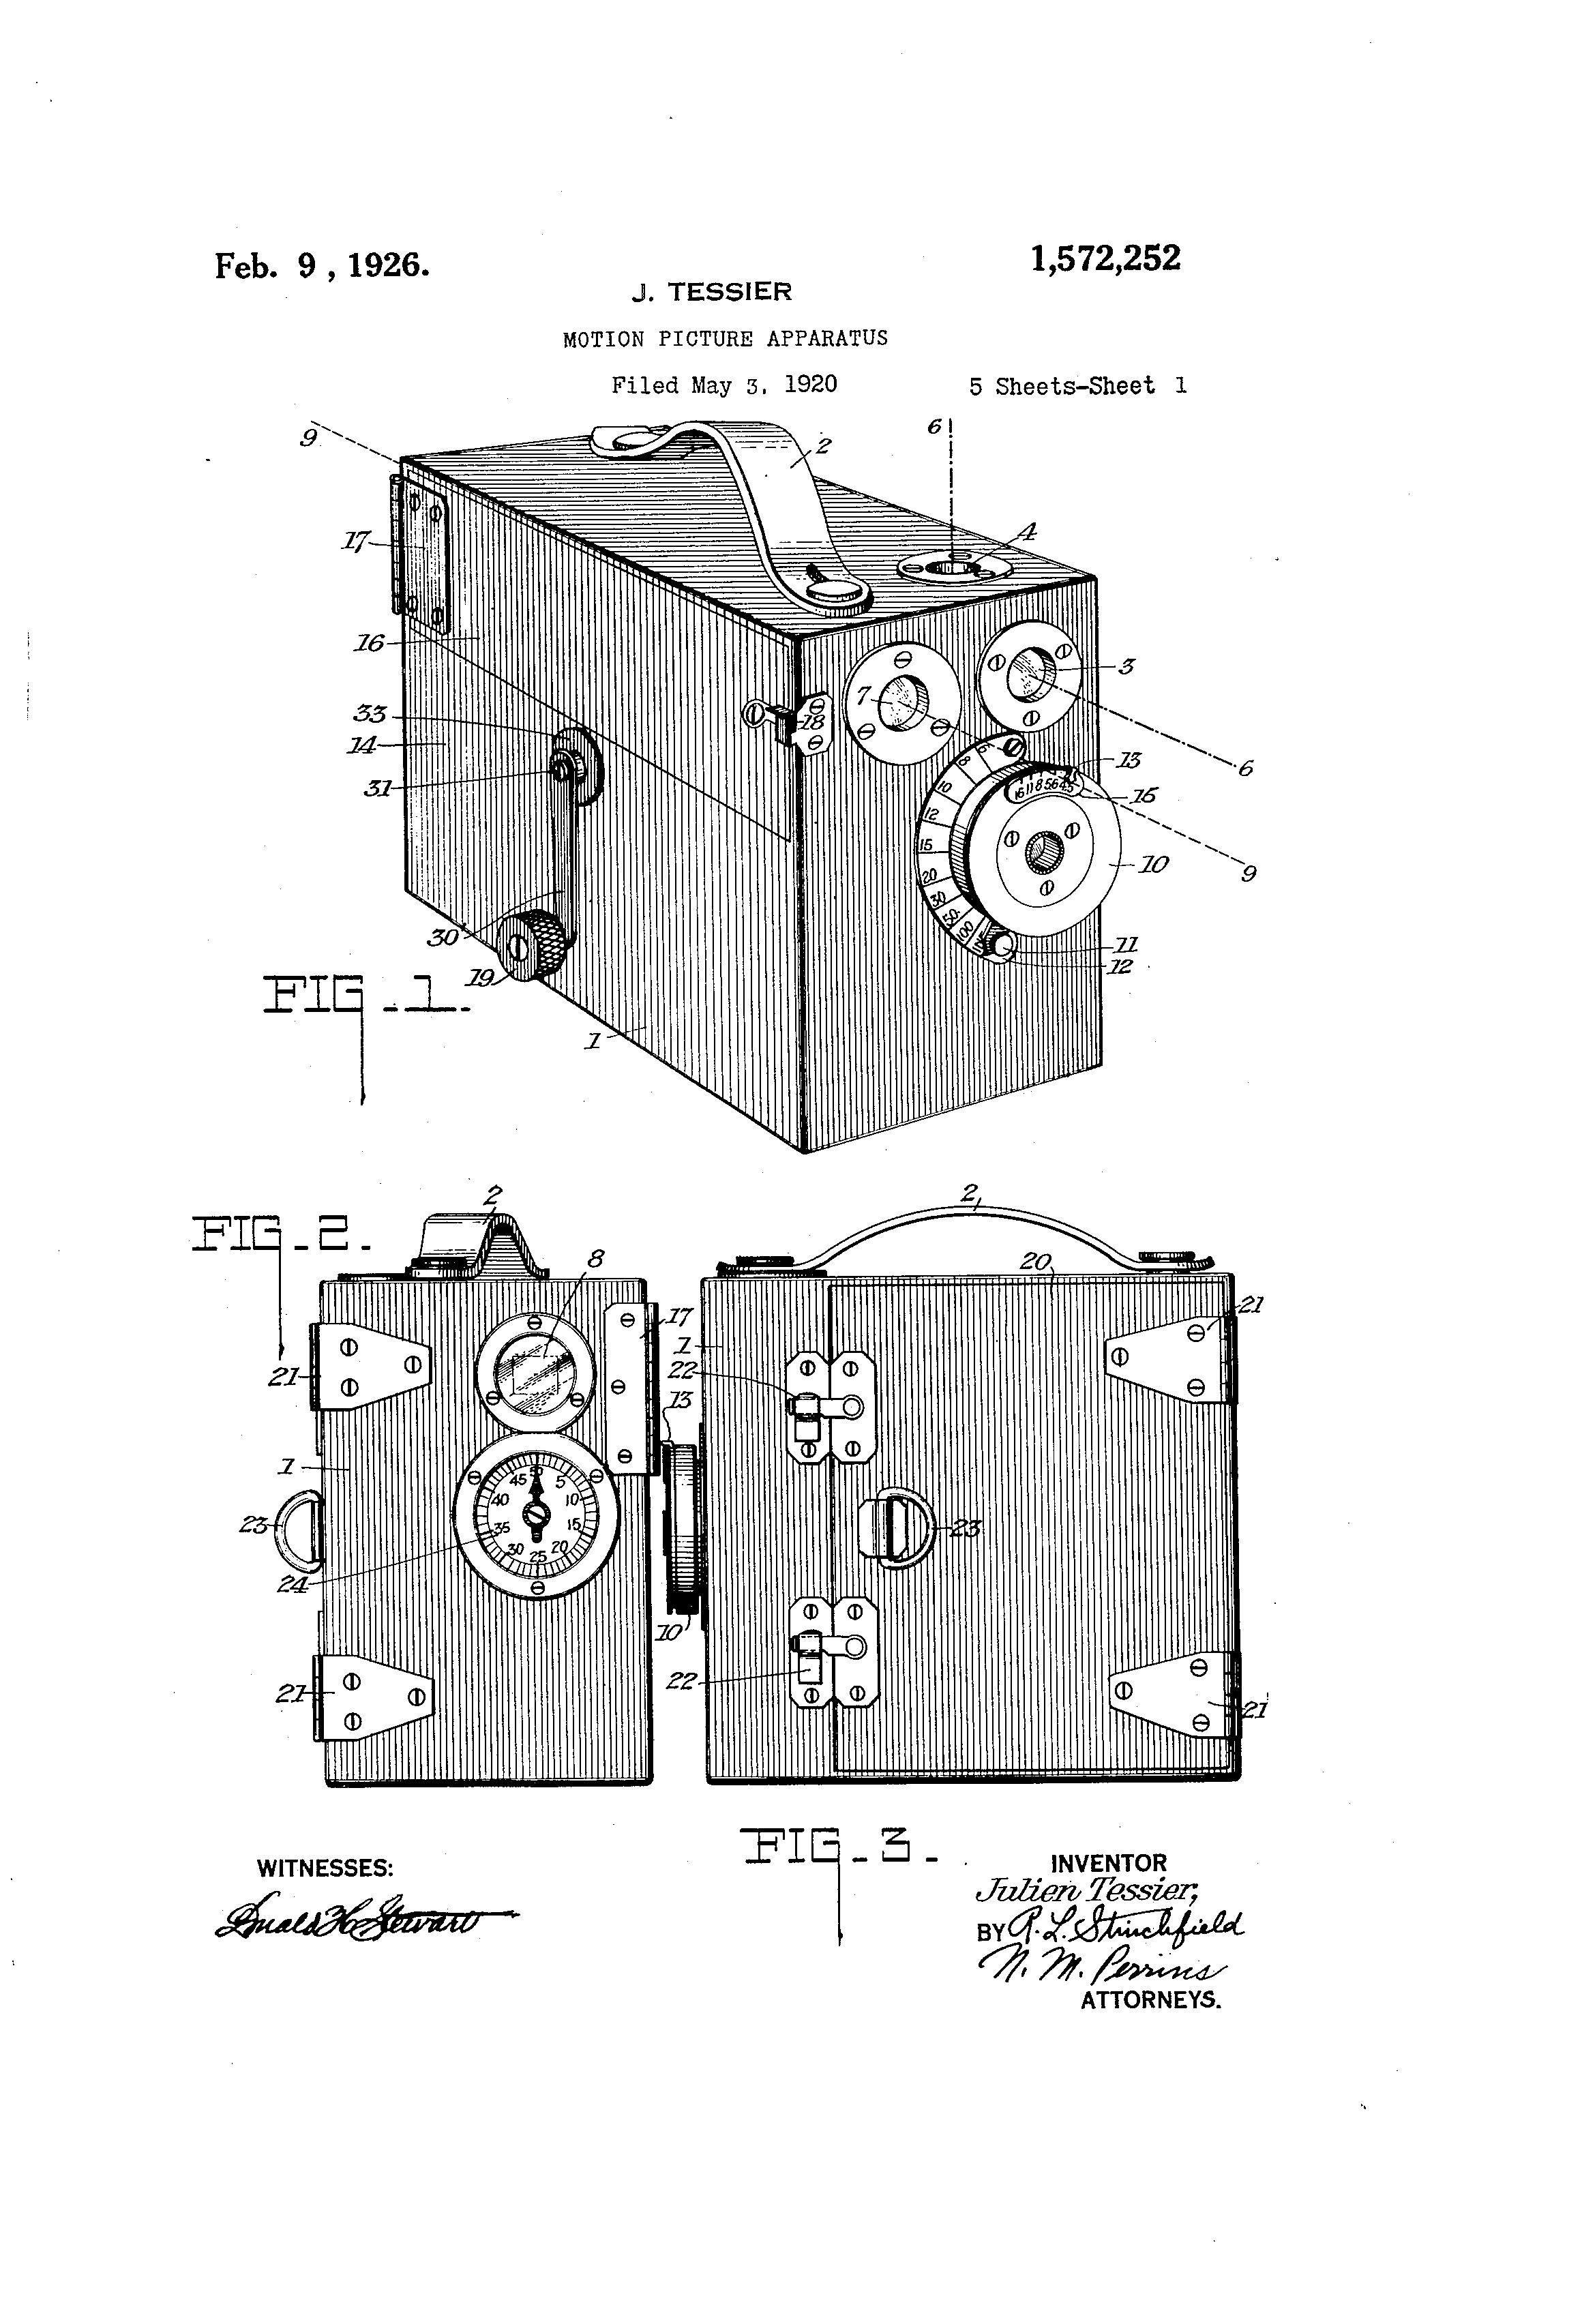 1920 05 03 US1572252 Motion Picture Apparatus